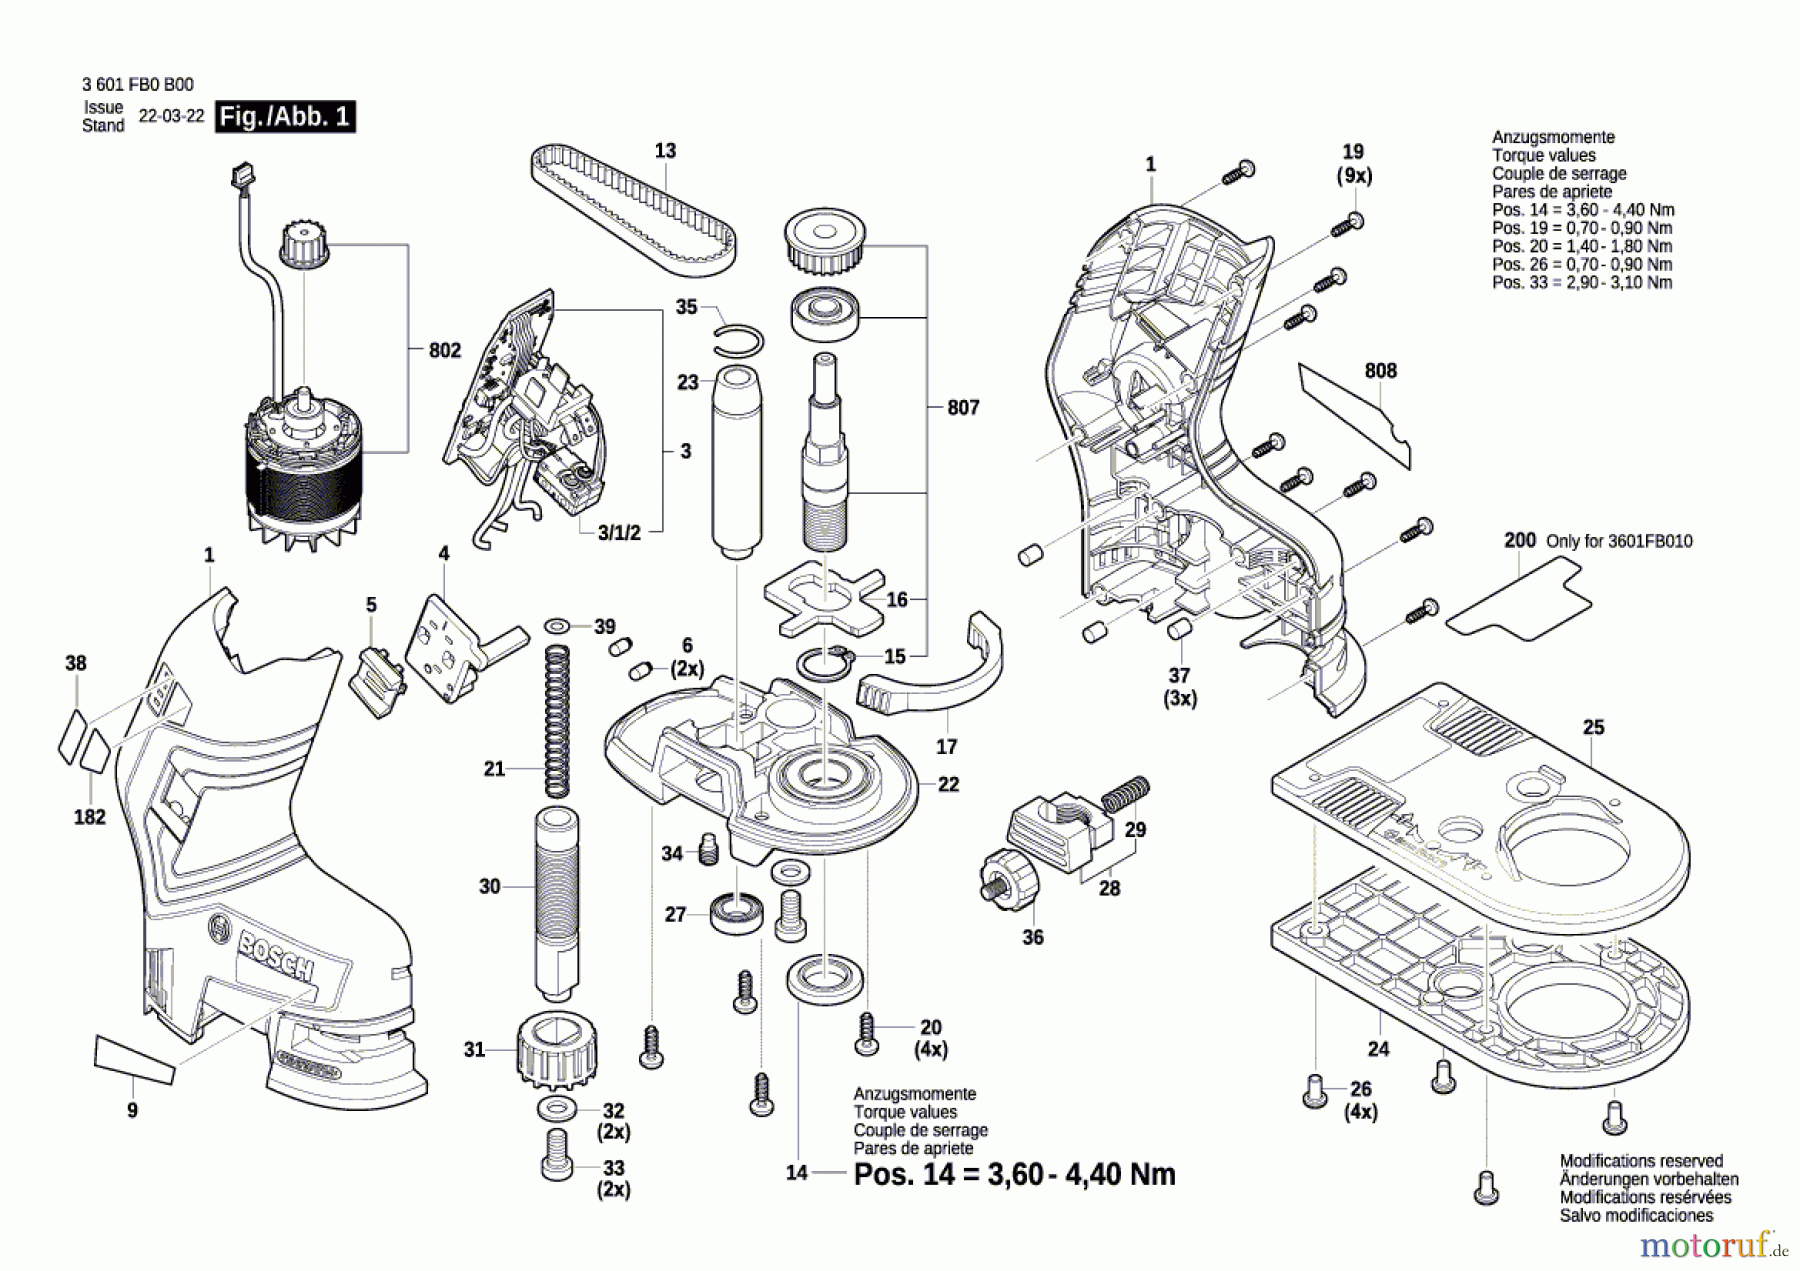  Bosch Werkzeug Oberfräse BACER BL 12 V Seite 1